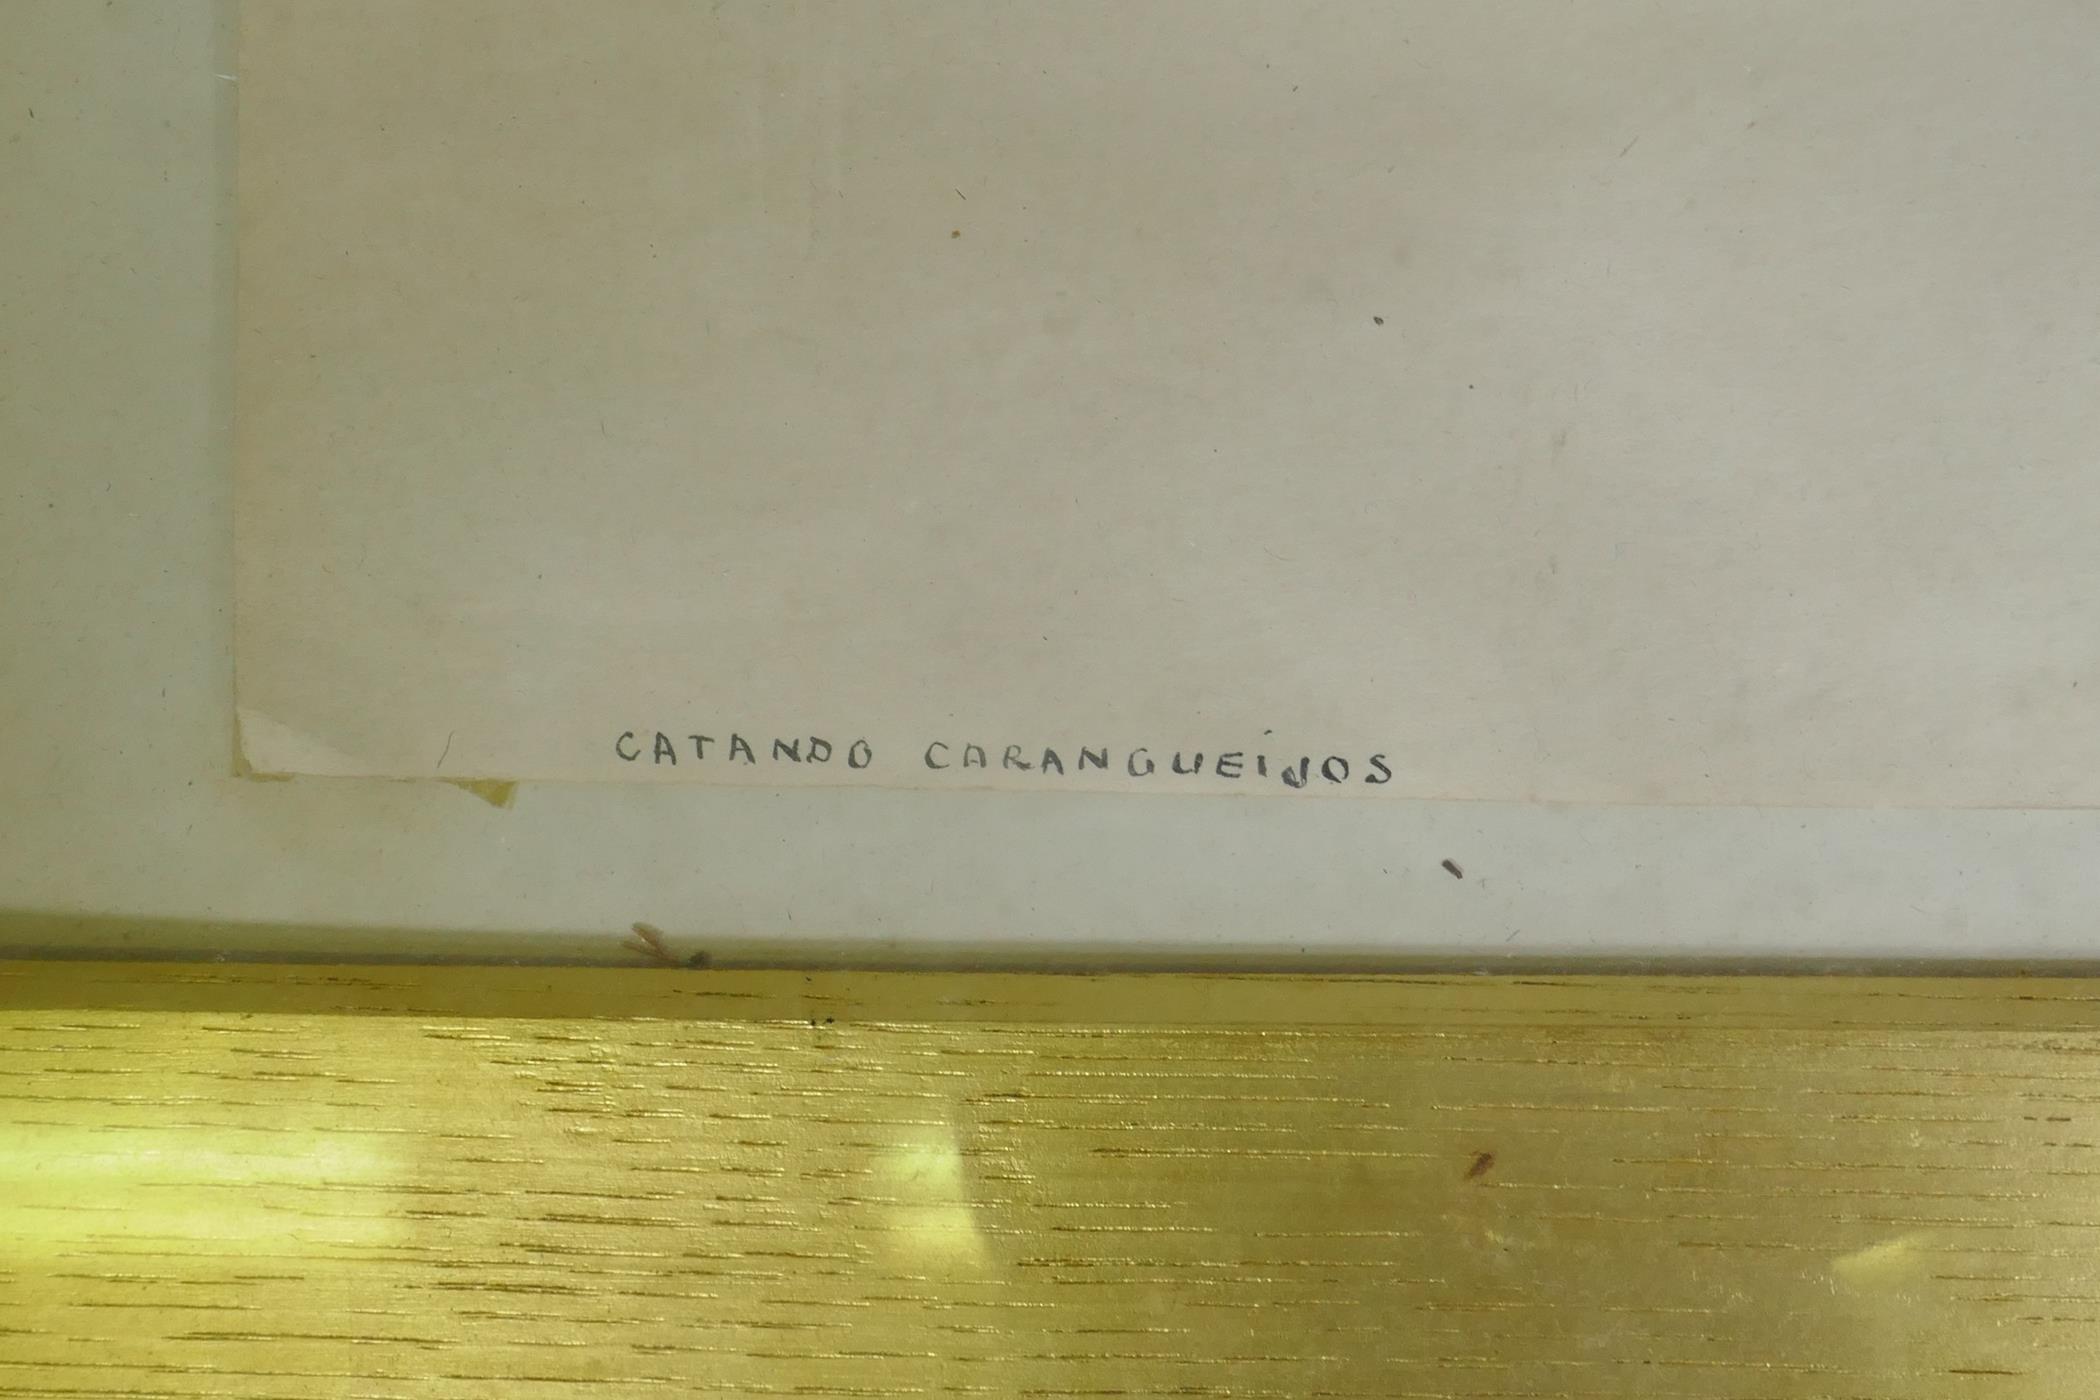 Pen and ink drawing, Brazilian shore 'Catando Caragueijos', catching crabs, signed Hortencio de - Image 3 of 4